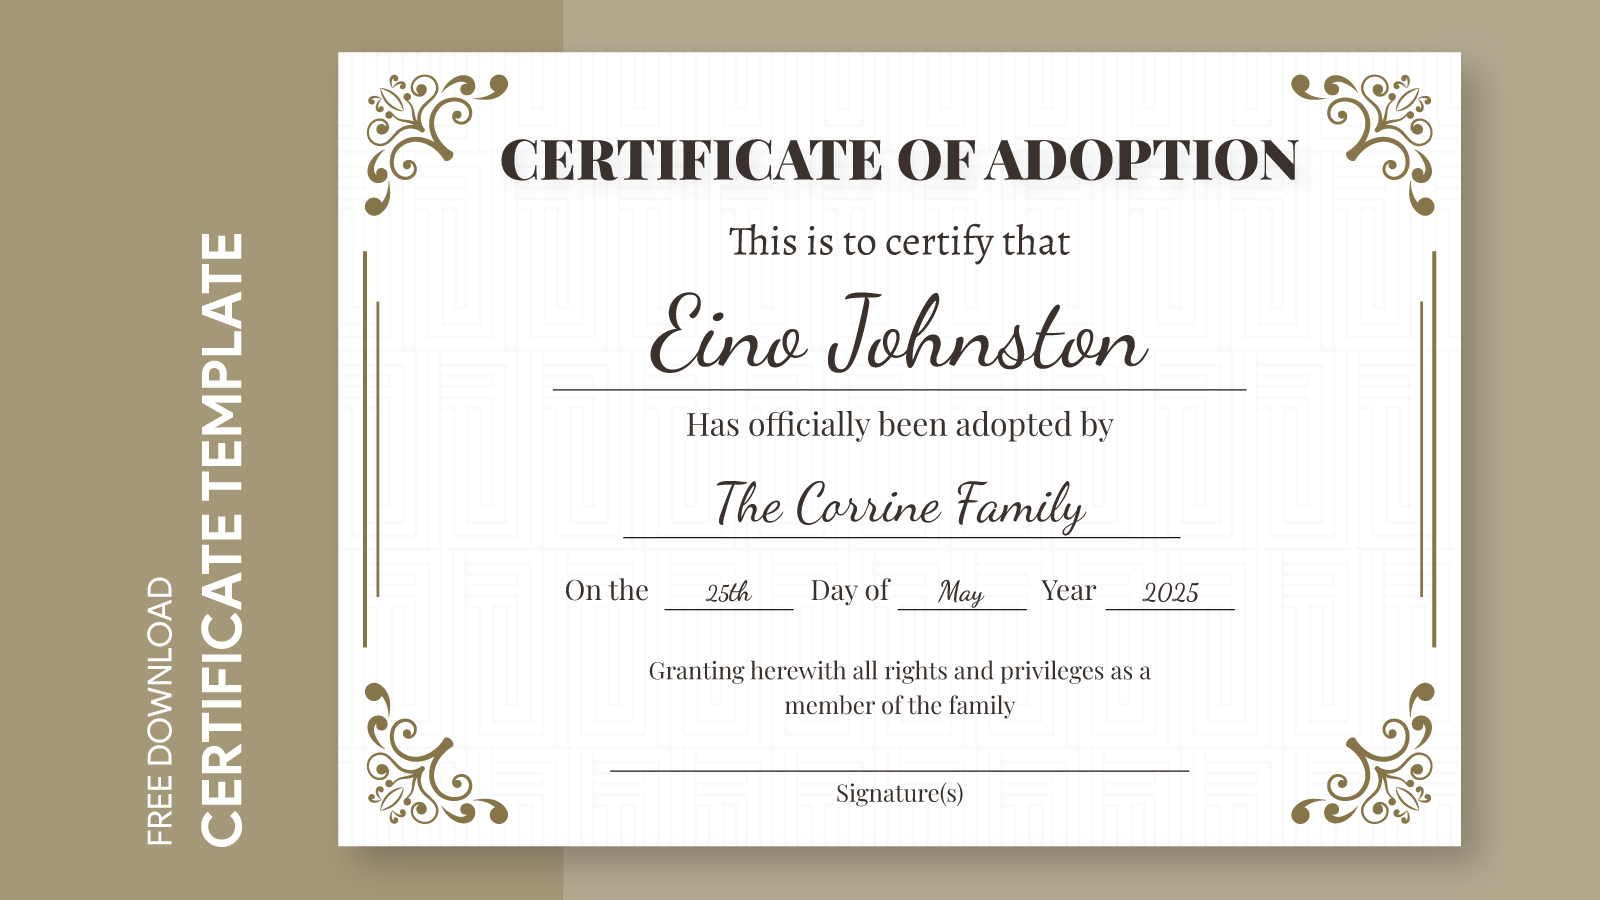 Adoption Certificate Free Google Docs Template - Gdoc.io pertaining to Fake Adoption Certificate Free Printable